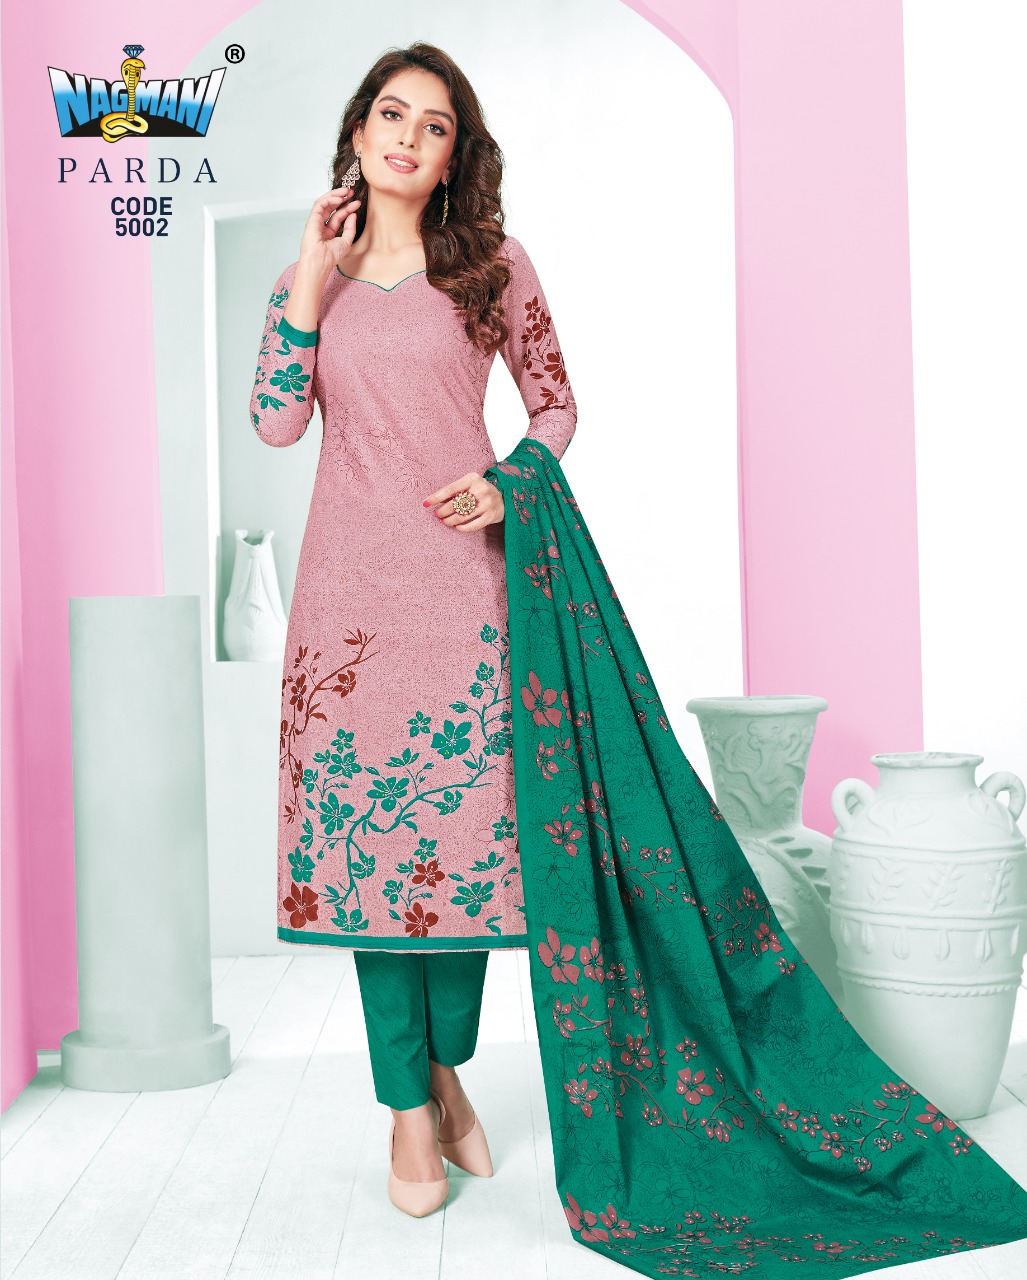 Nagmani Prints Parda Vol 5 Printed Cotton Dress Material Collection